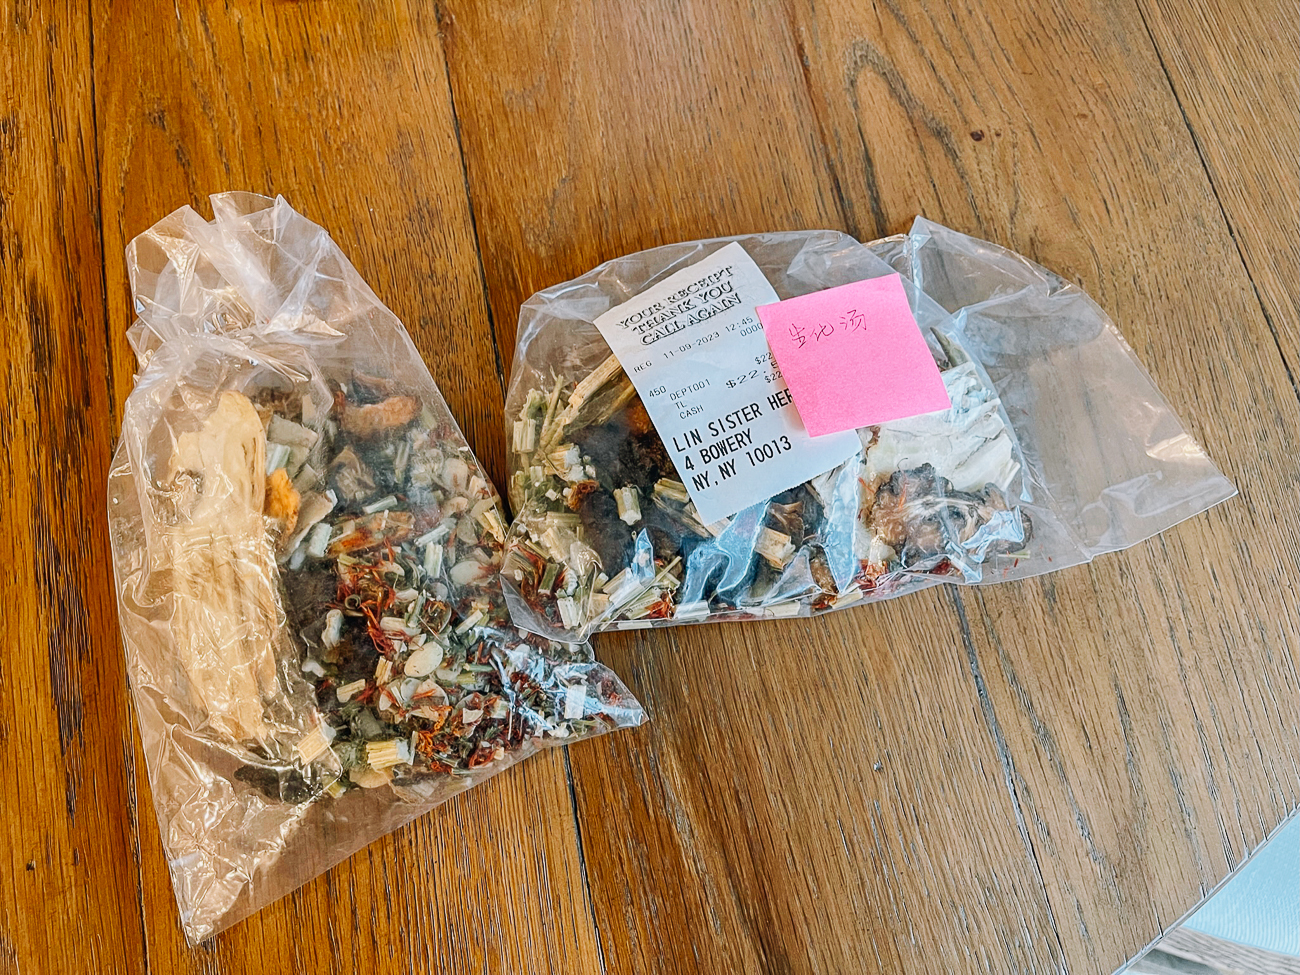 Shenhua tang herbs in bags